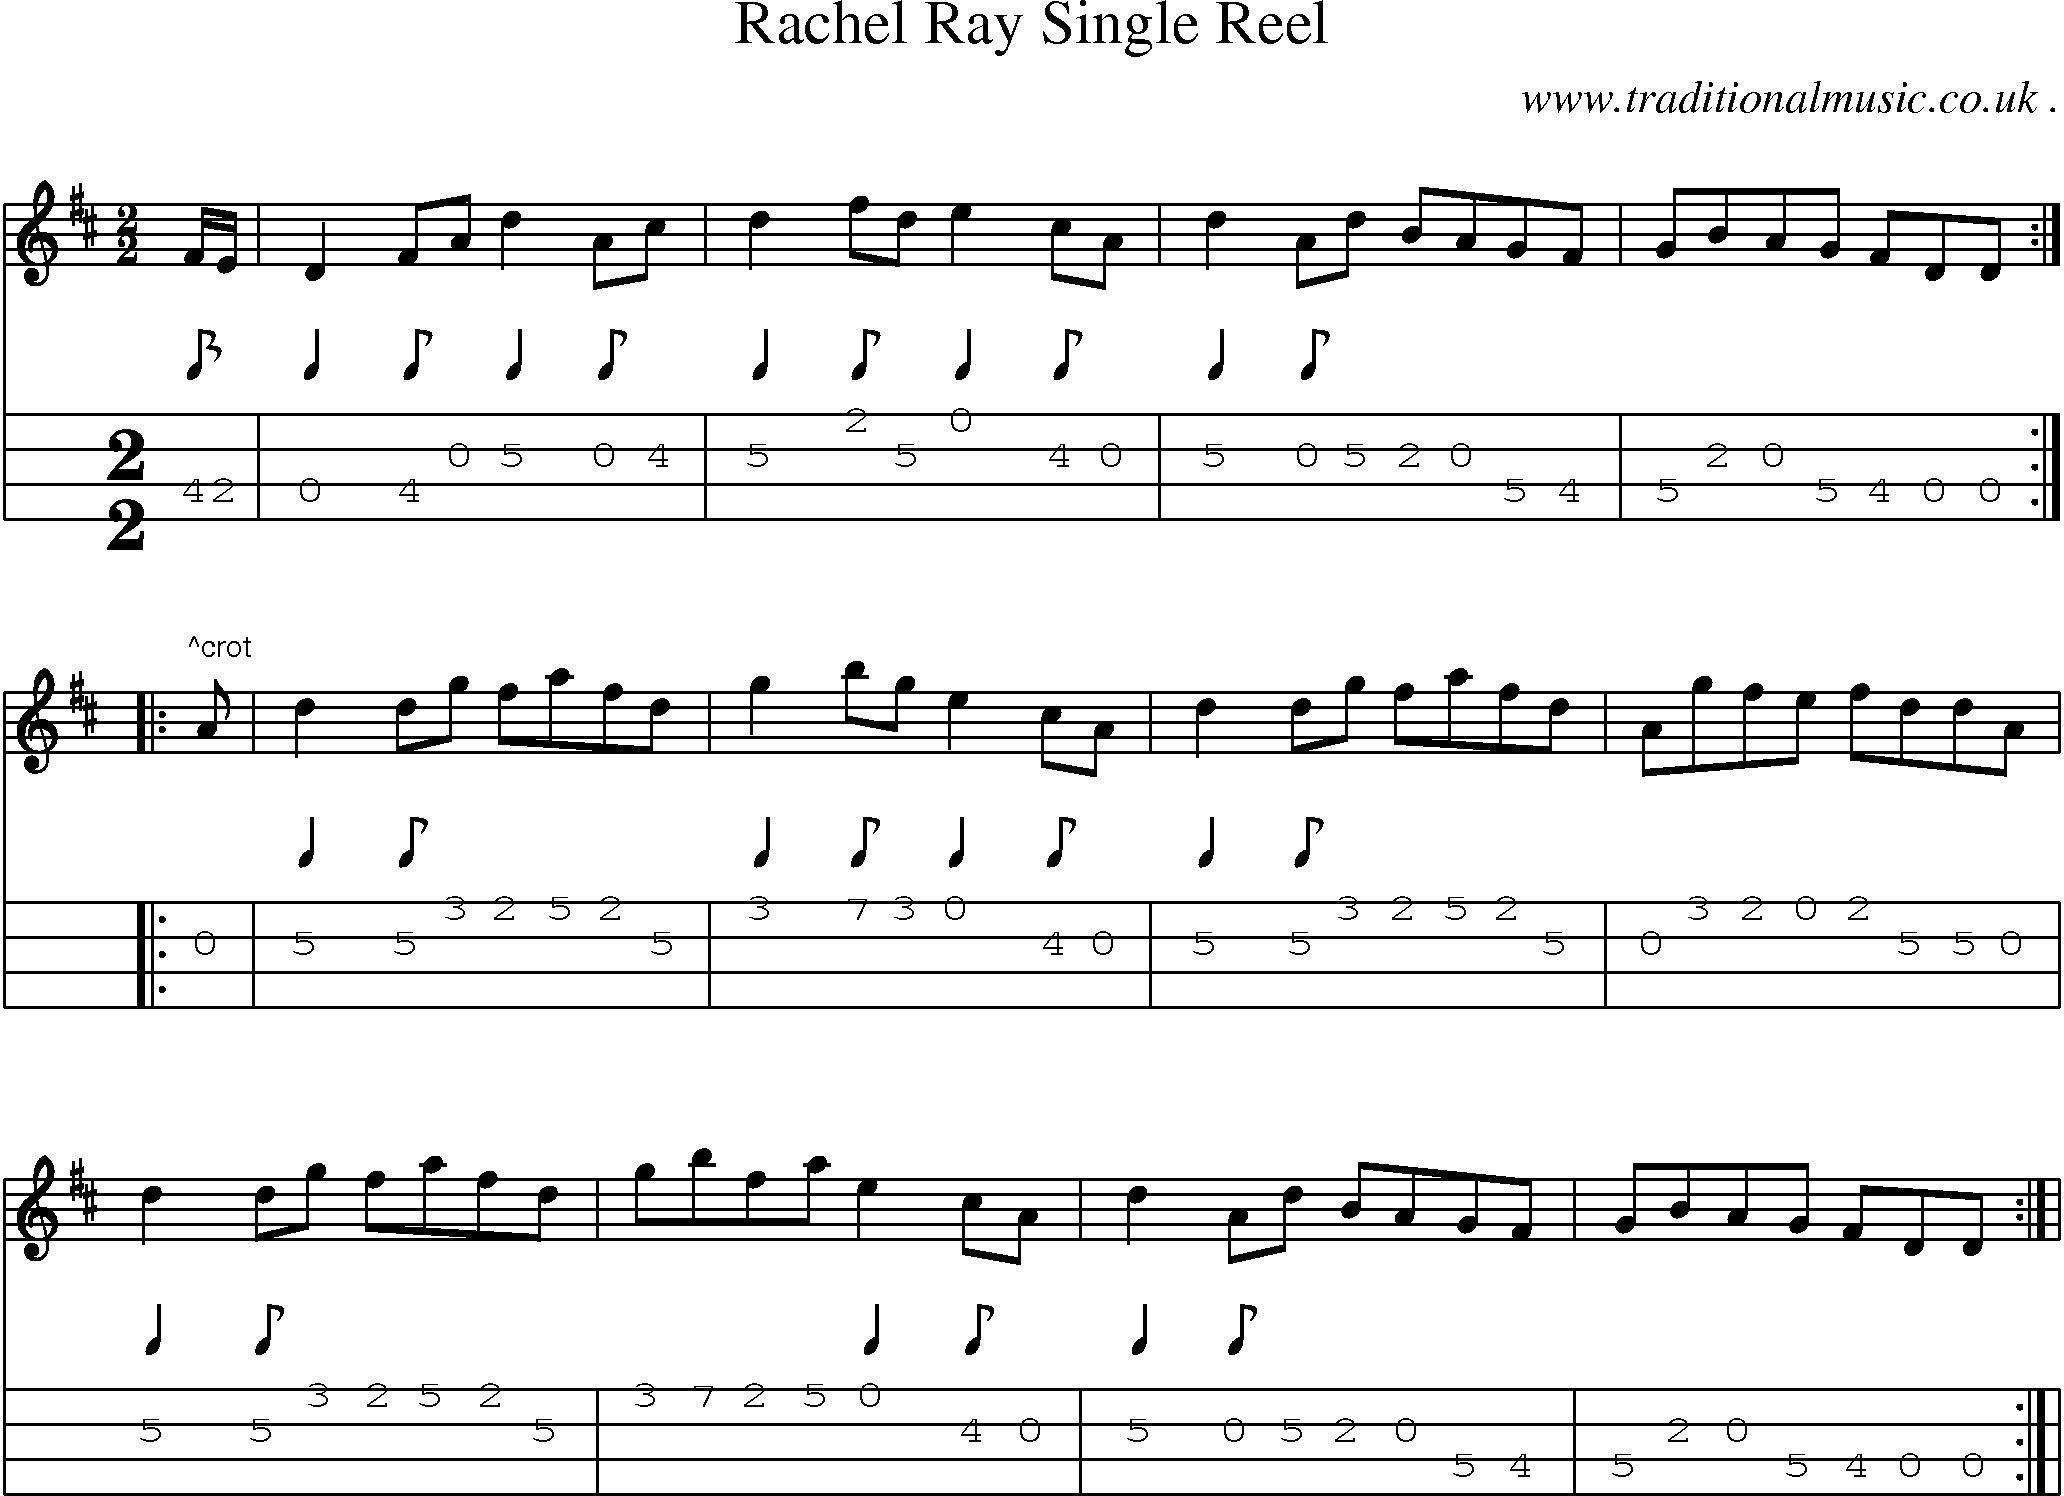 Sheet-Music and Mandolin Tabs for Rachel Ray Single Reel